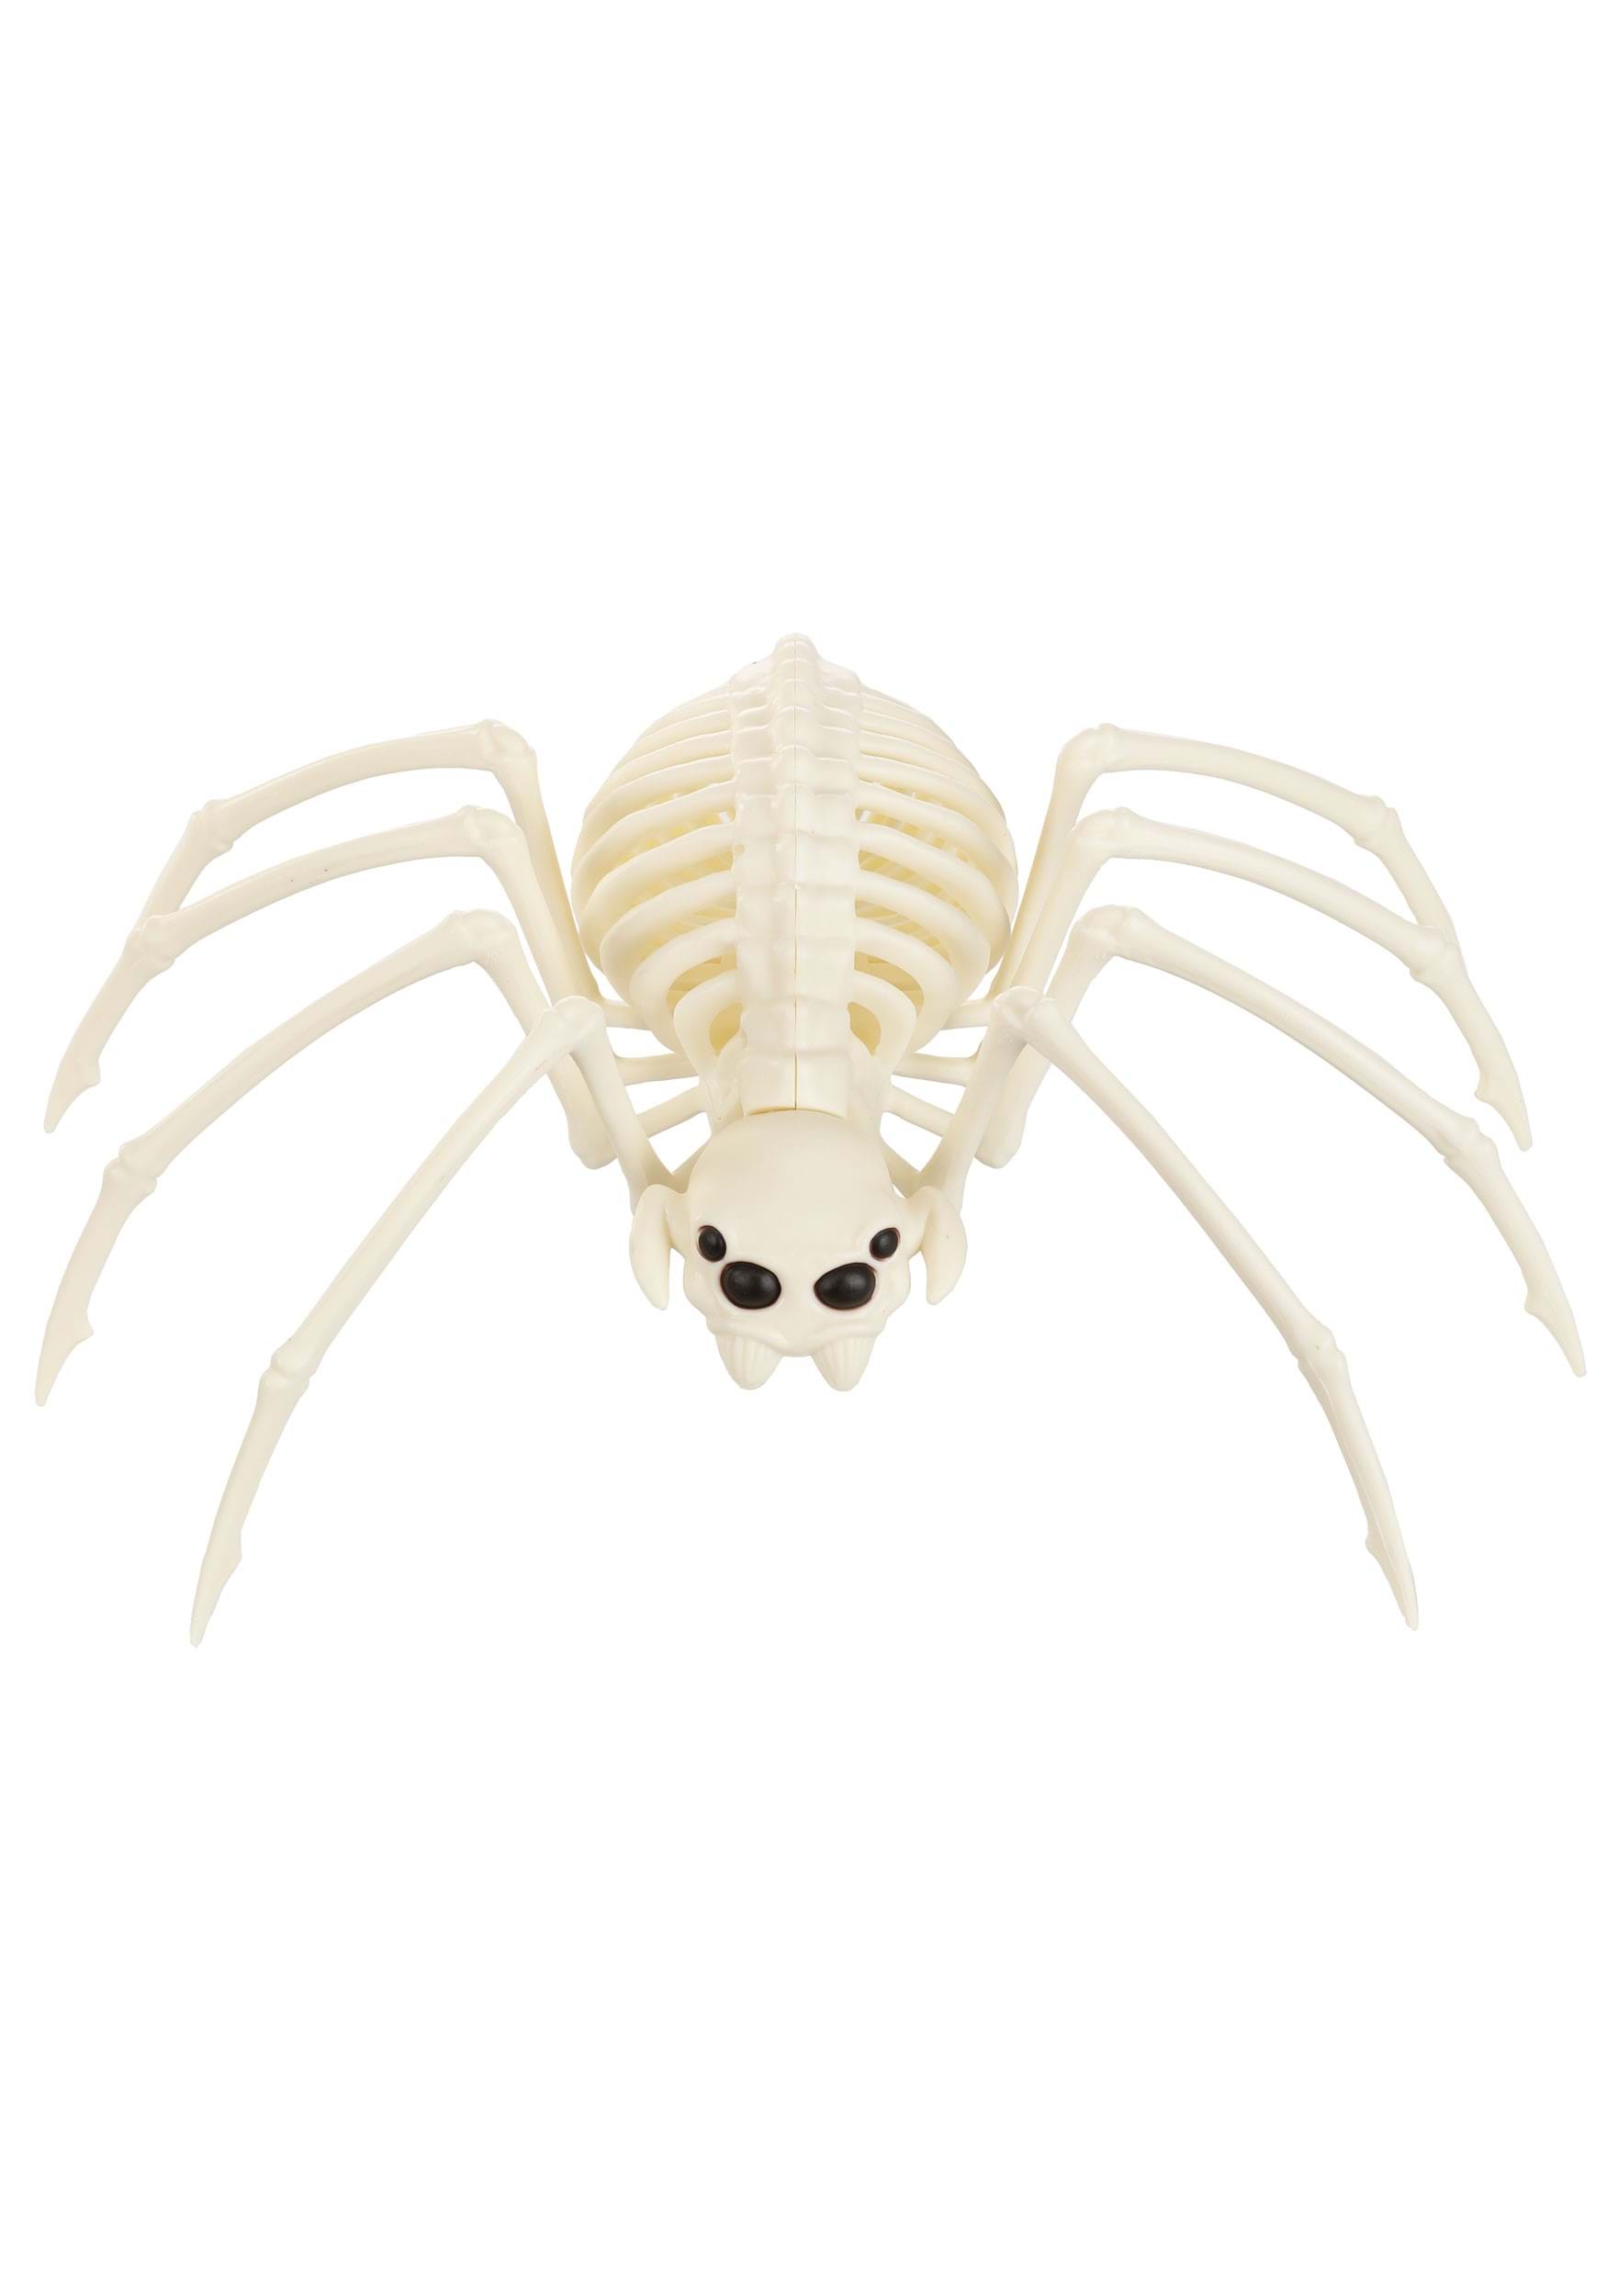 13.6 Inch Black Light Spooky Ghostly Spider Skeleton , Halloween Decor